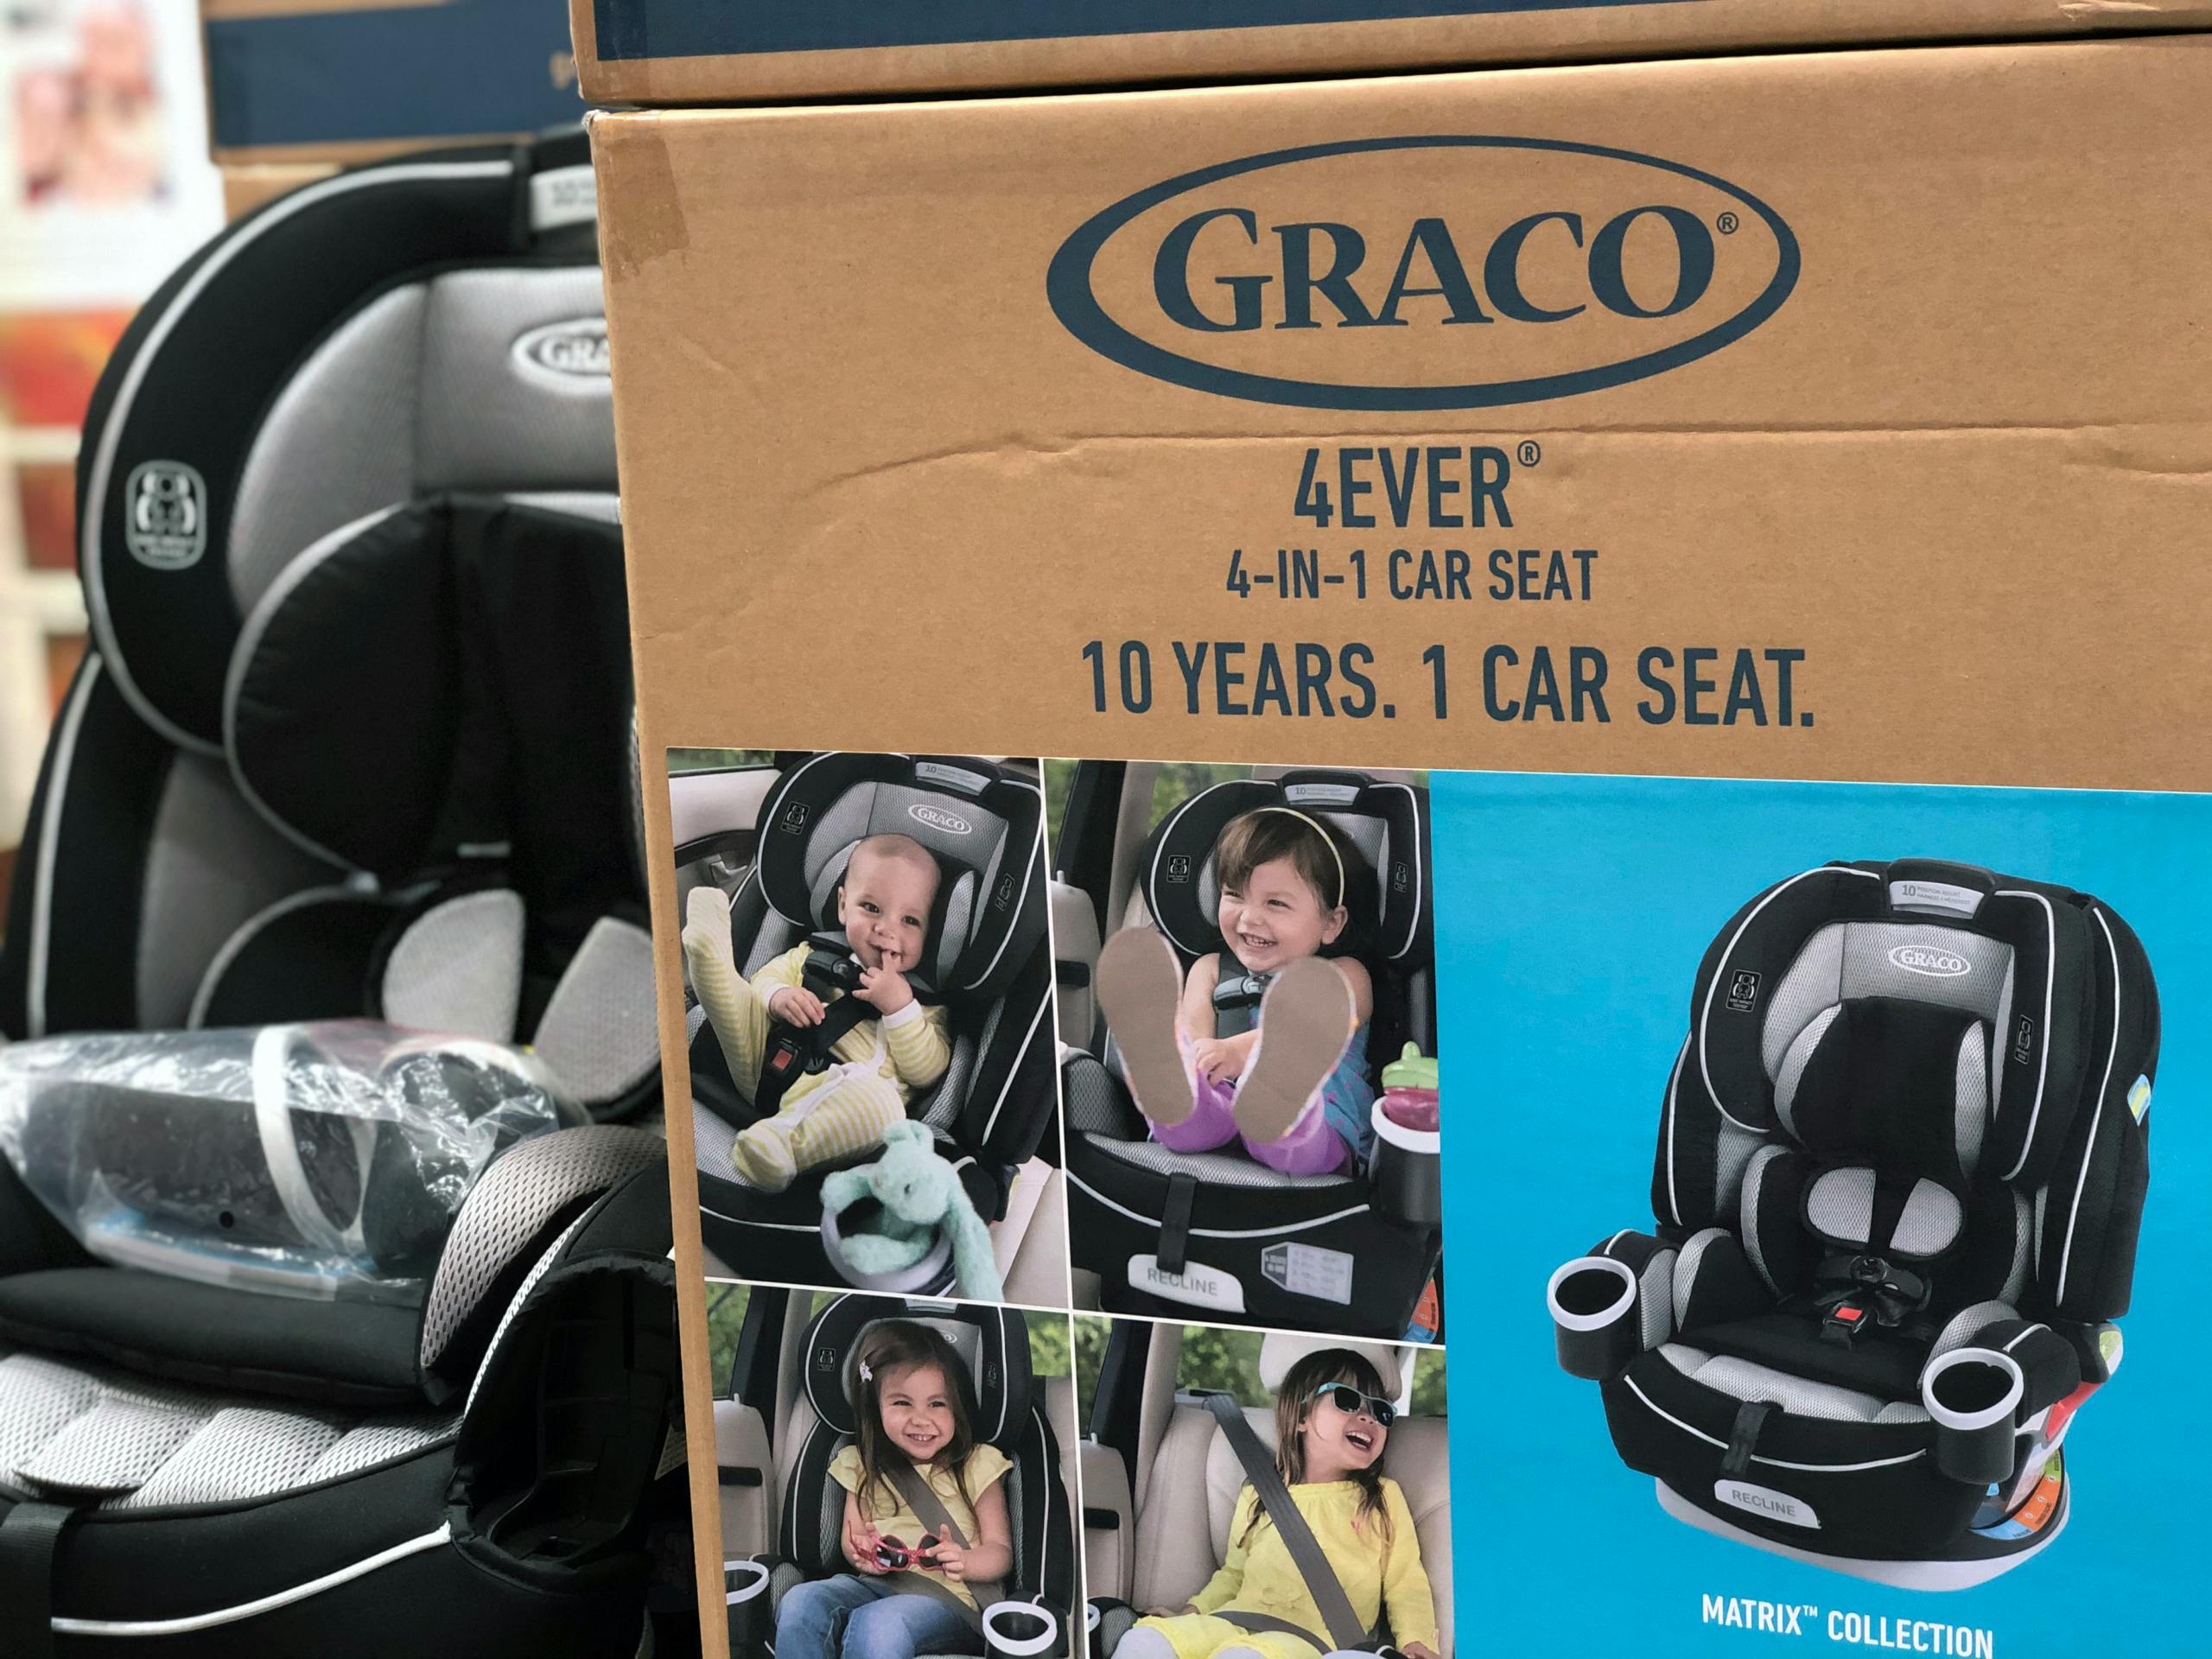 graco car seat sale